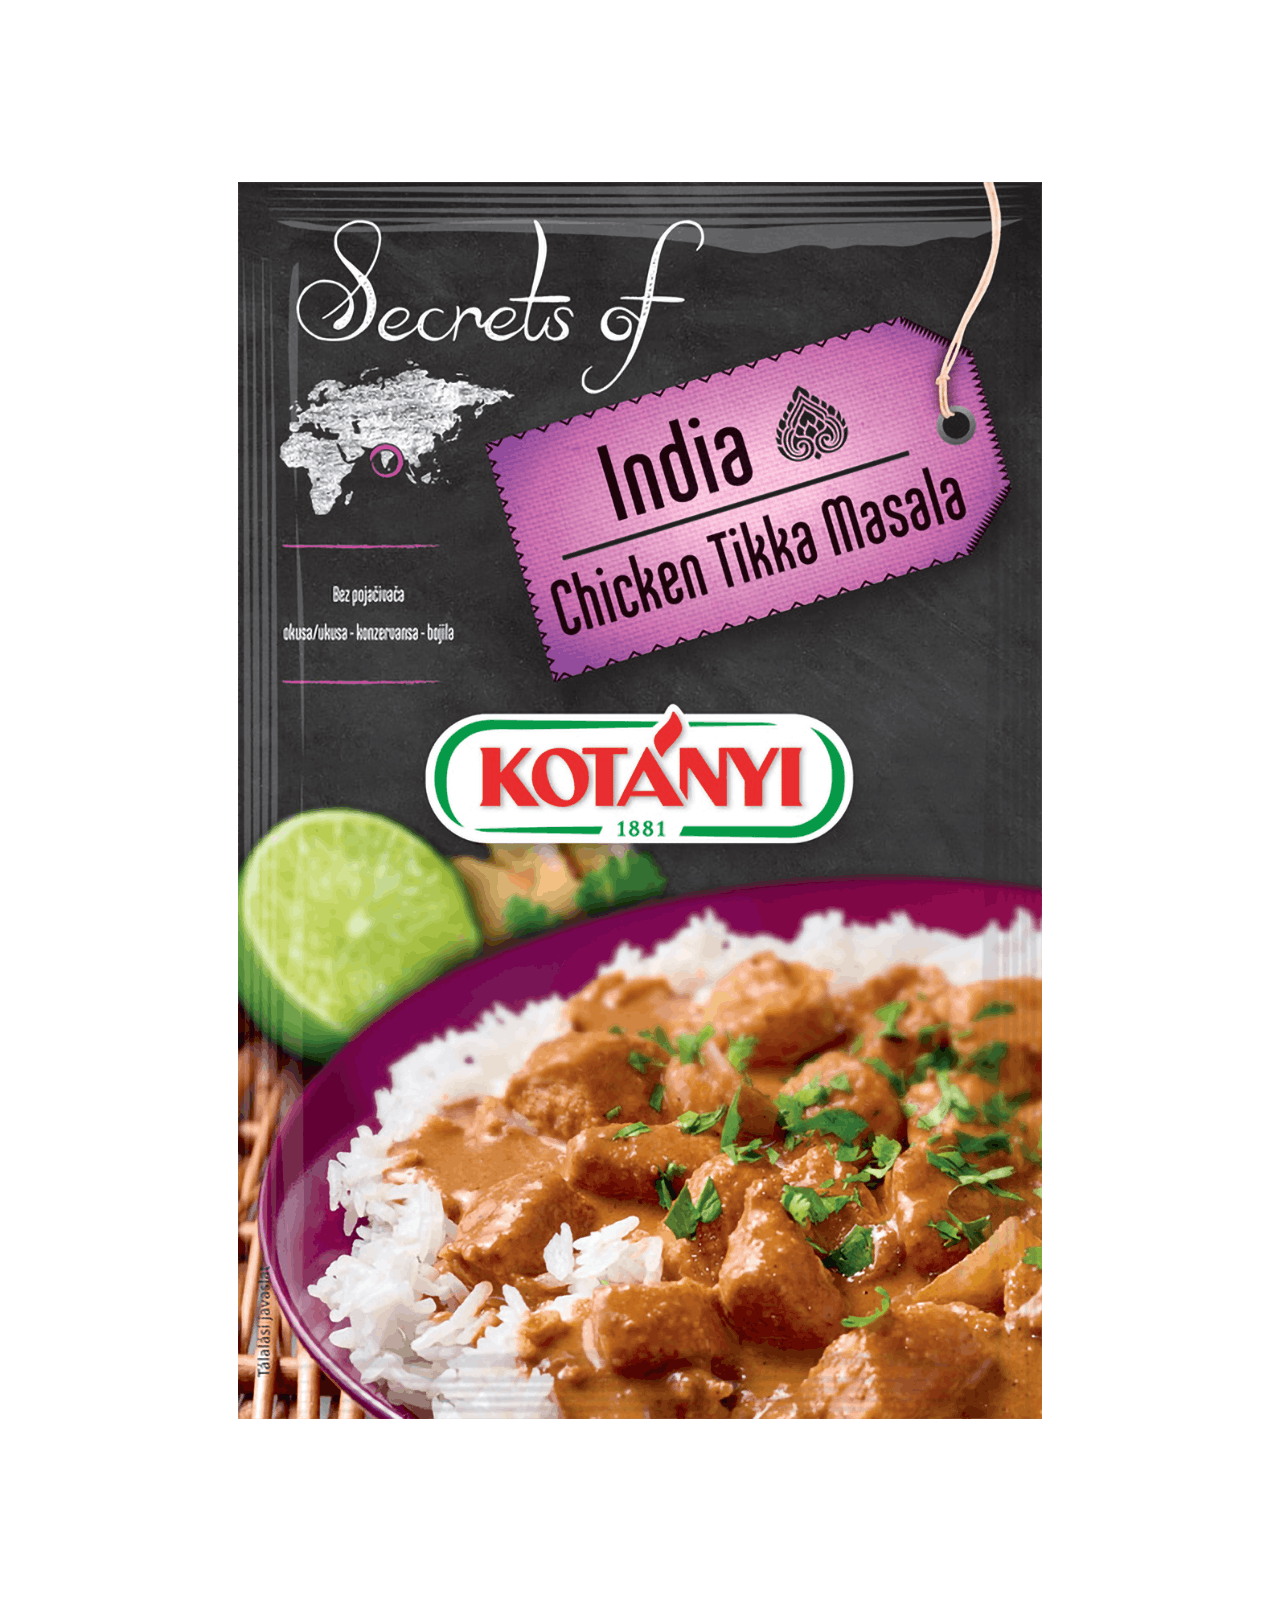 354908 Kotanyi Secrets Of India Chicken Tika Masala B2c Pouch